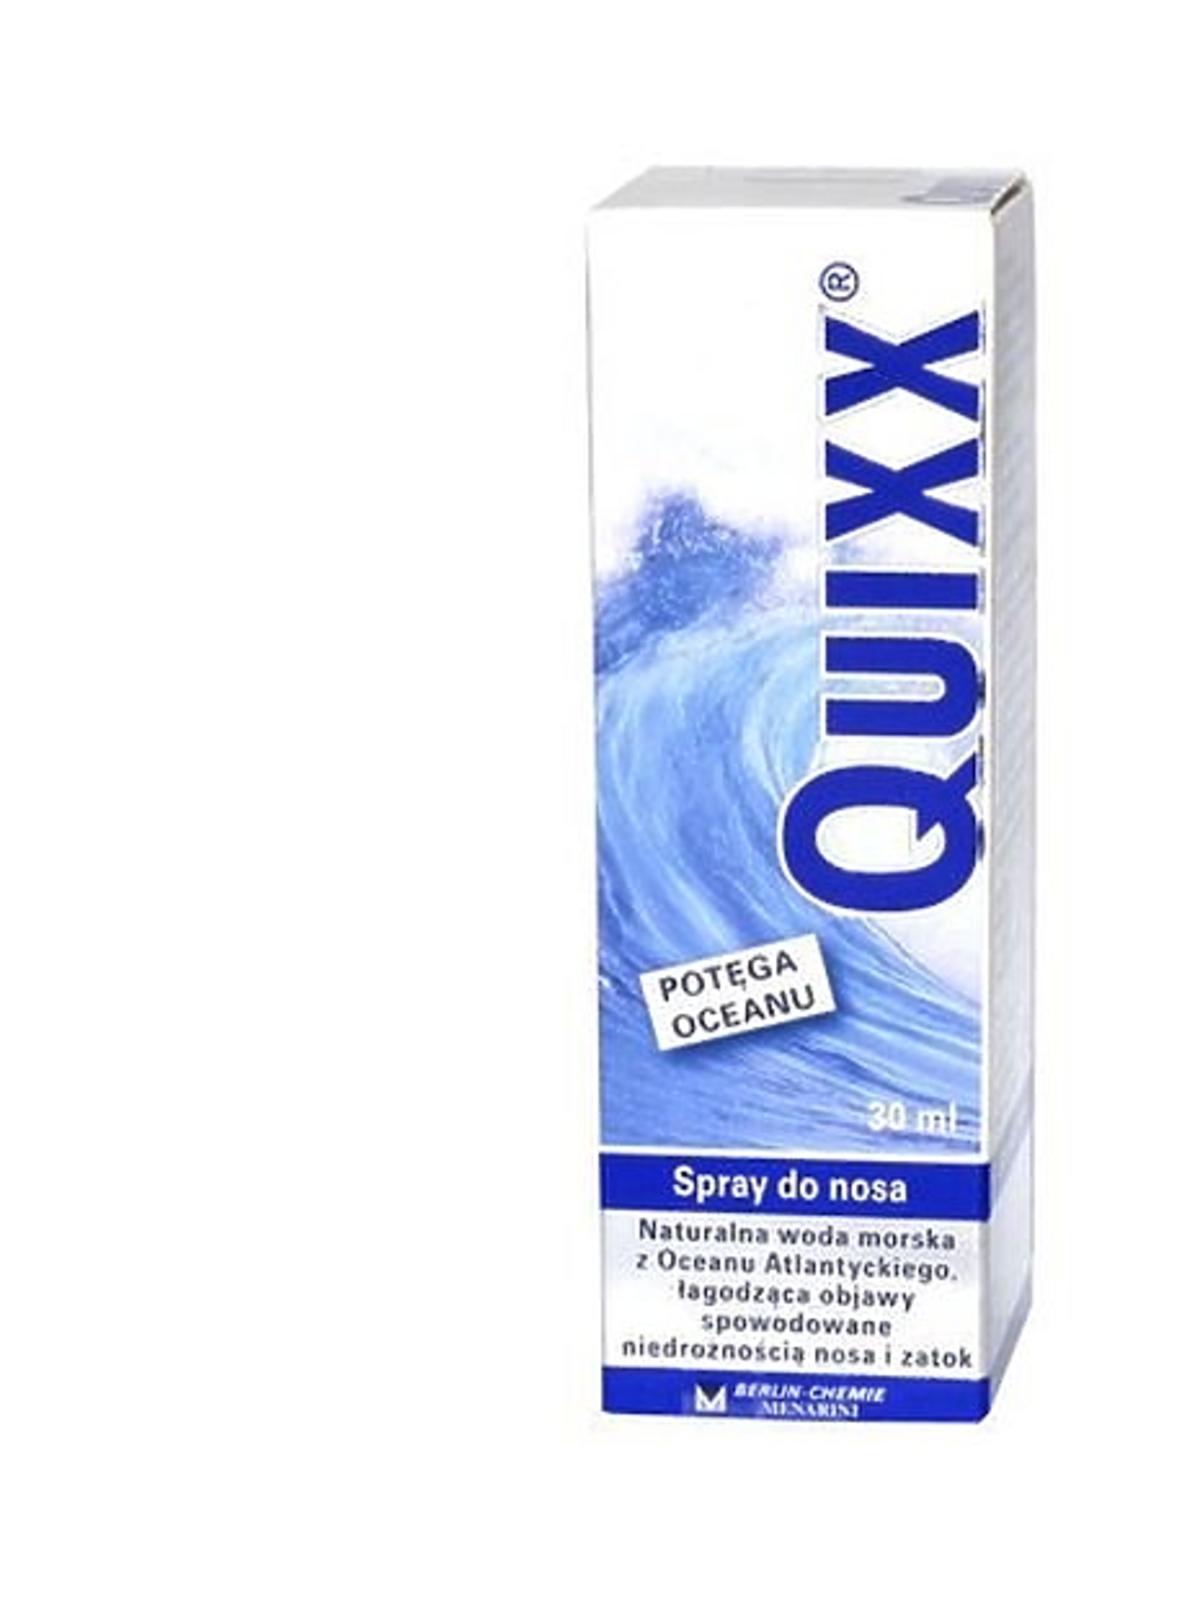 woda morska do nosa Quixx Nasal Spray hipertoniczny, Laboratoires Pharma Ster, cena: ok. 20 zł/30 ml